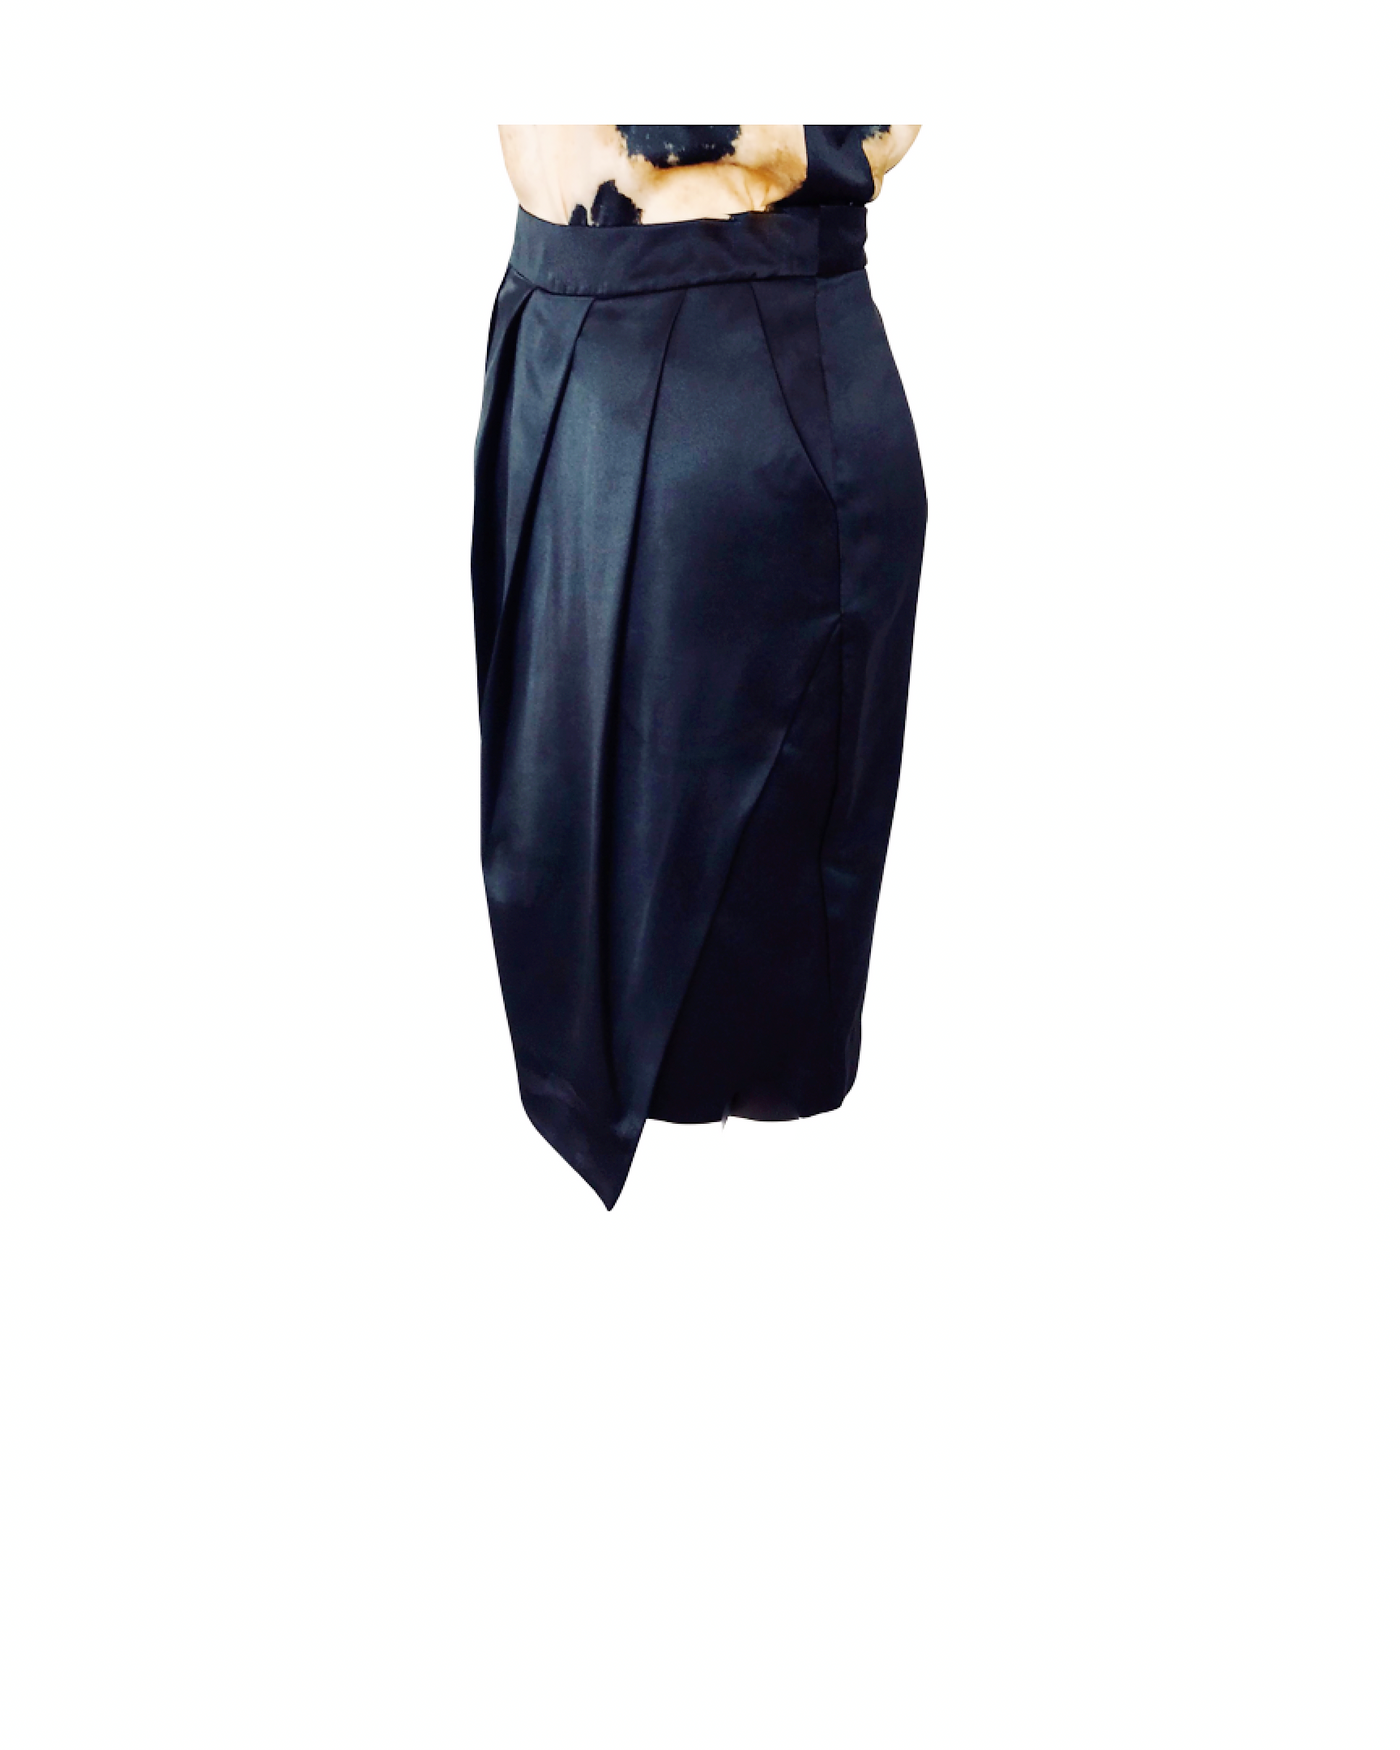 Black silk satin wrap Pleat Skirt - ( 50% OFF )